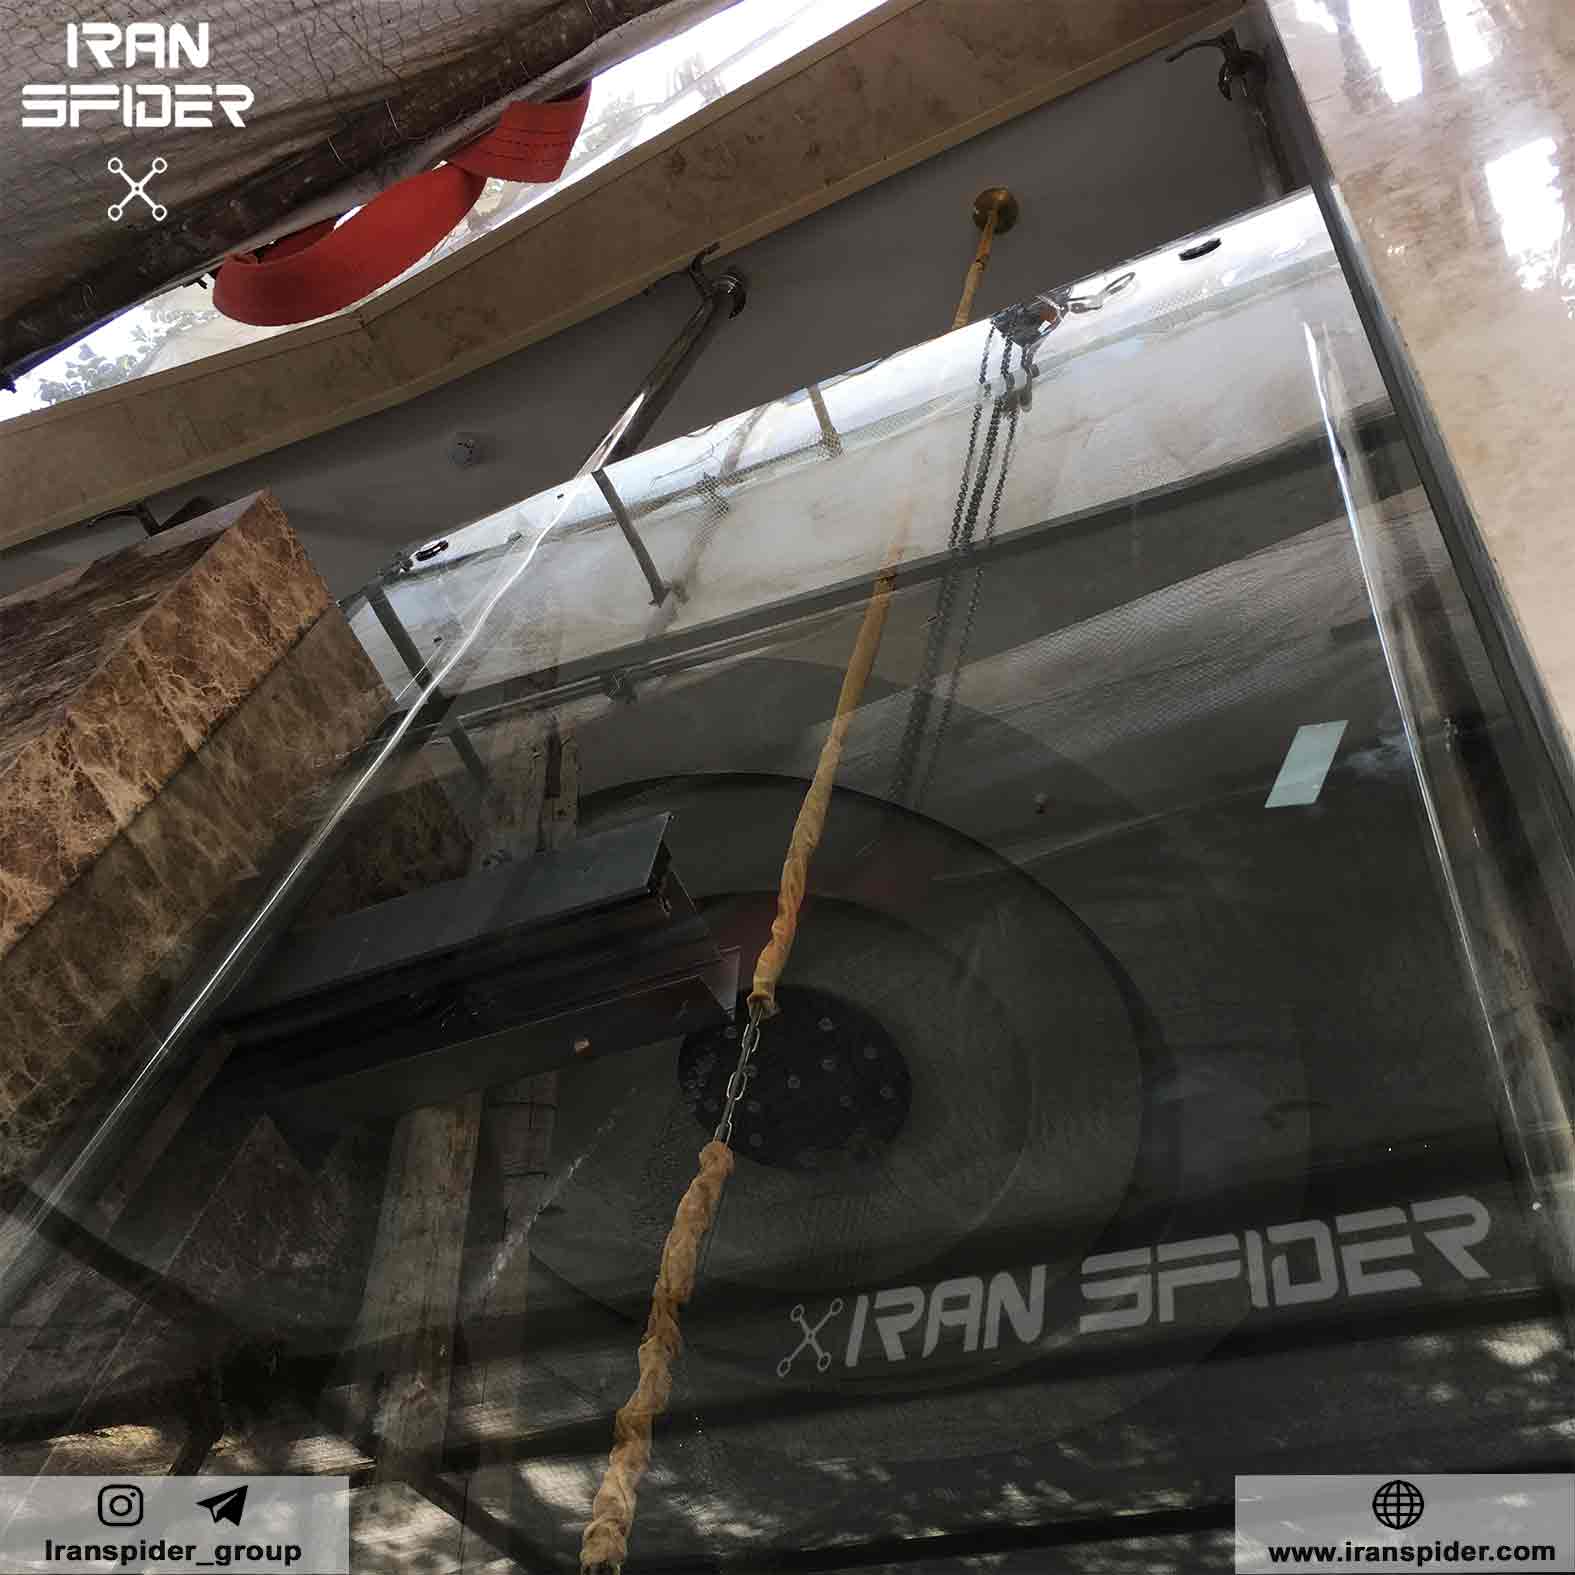 Spider-Glass_فروشگاه-چرم-مبلی-یافت-آباد-iranspider.com_(16)